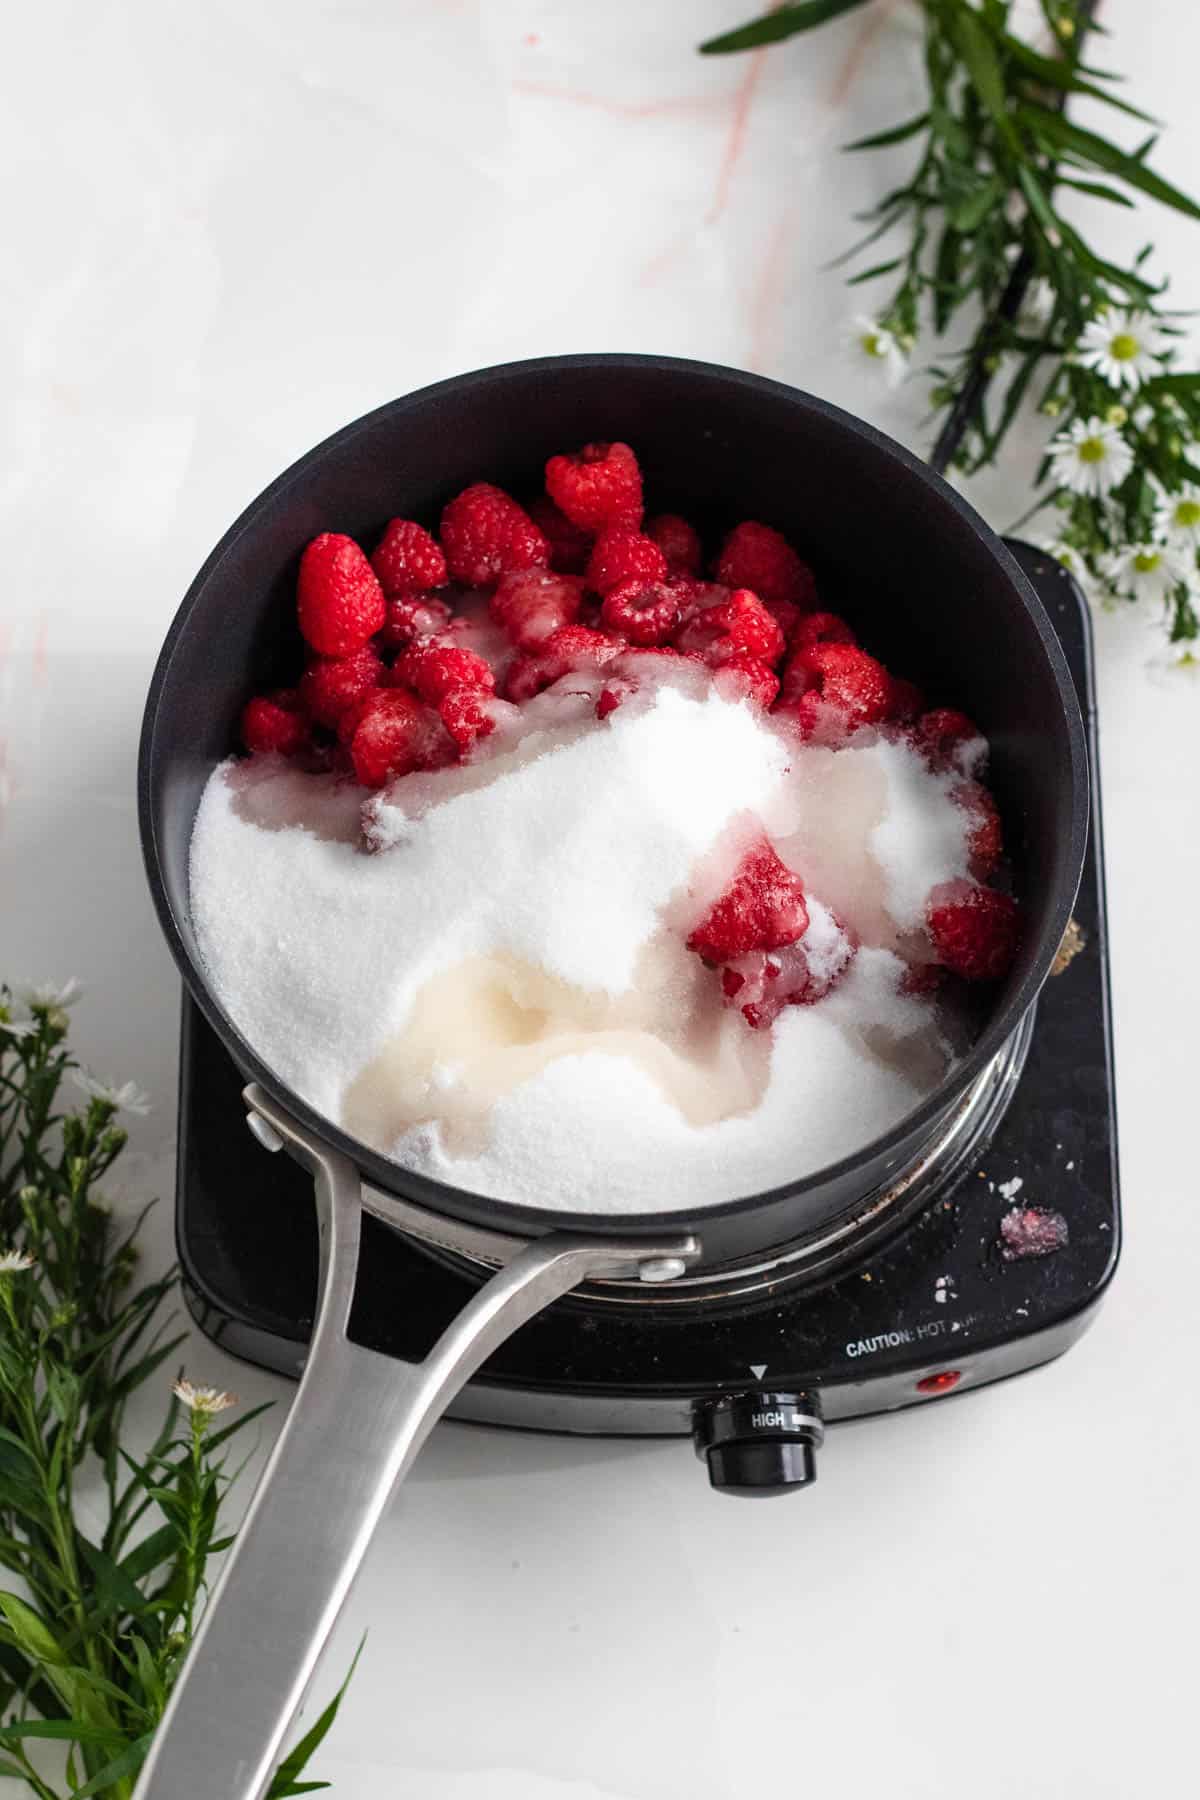 raspberries, sugar, and lemon juice in a medium-sized pot